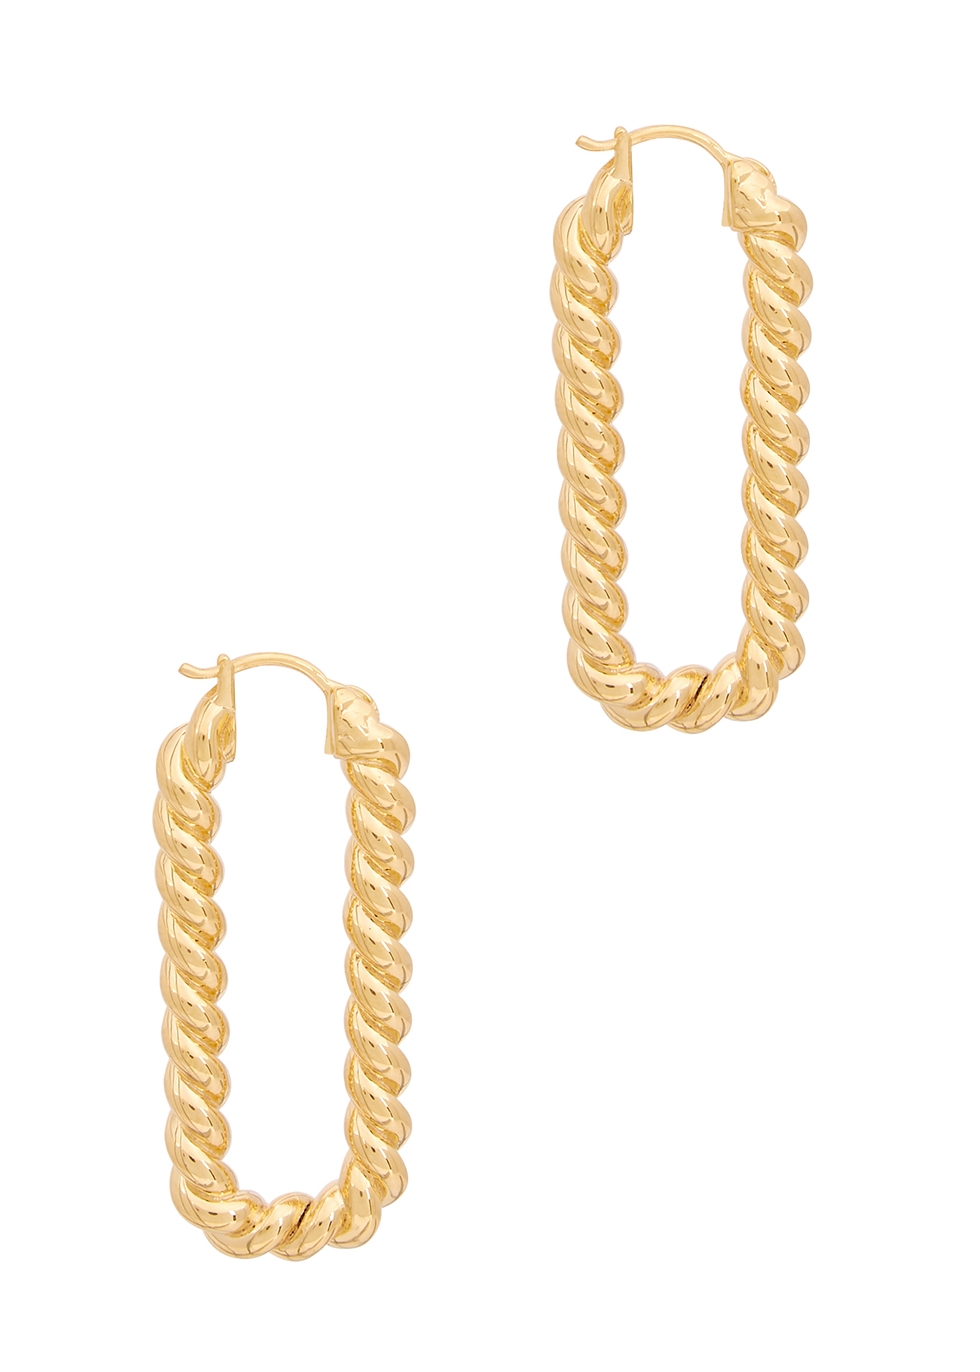 Tidal Ovate 18kt gold-plated earrings